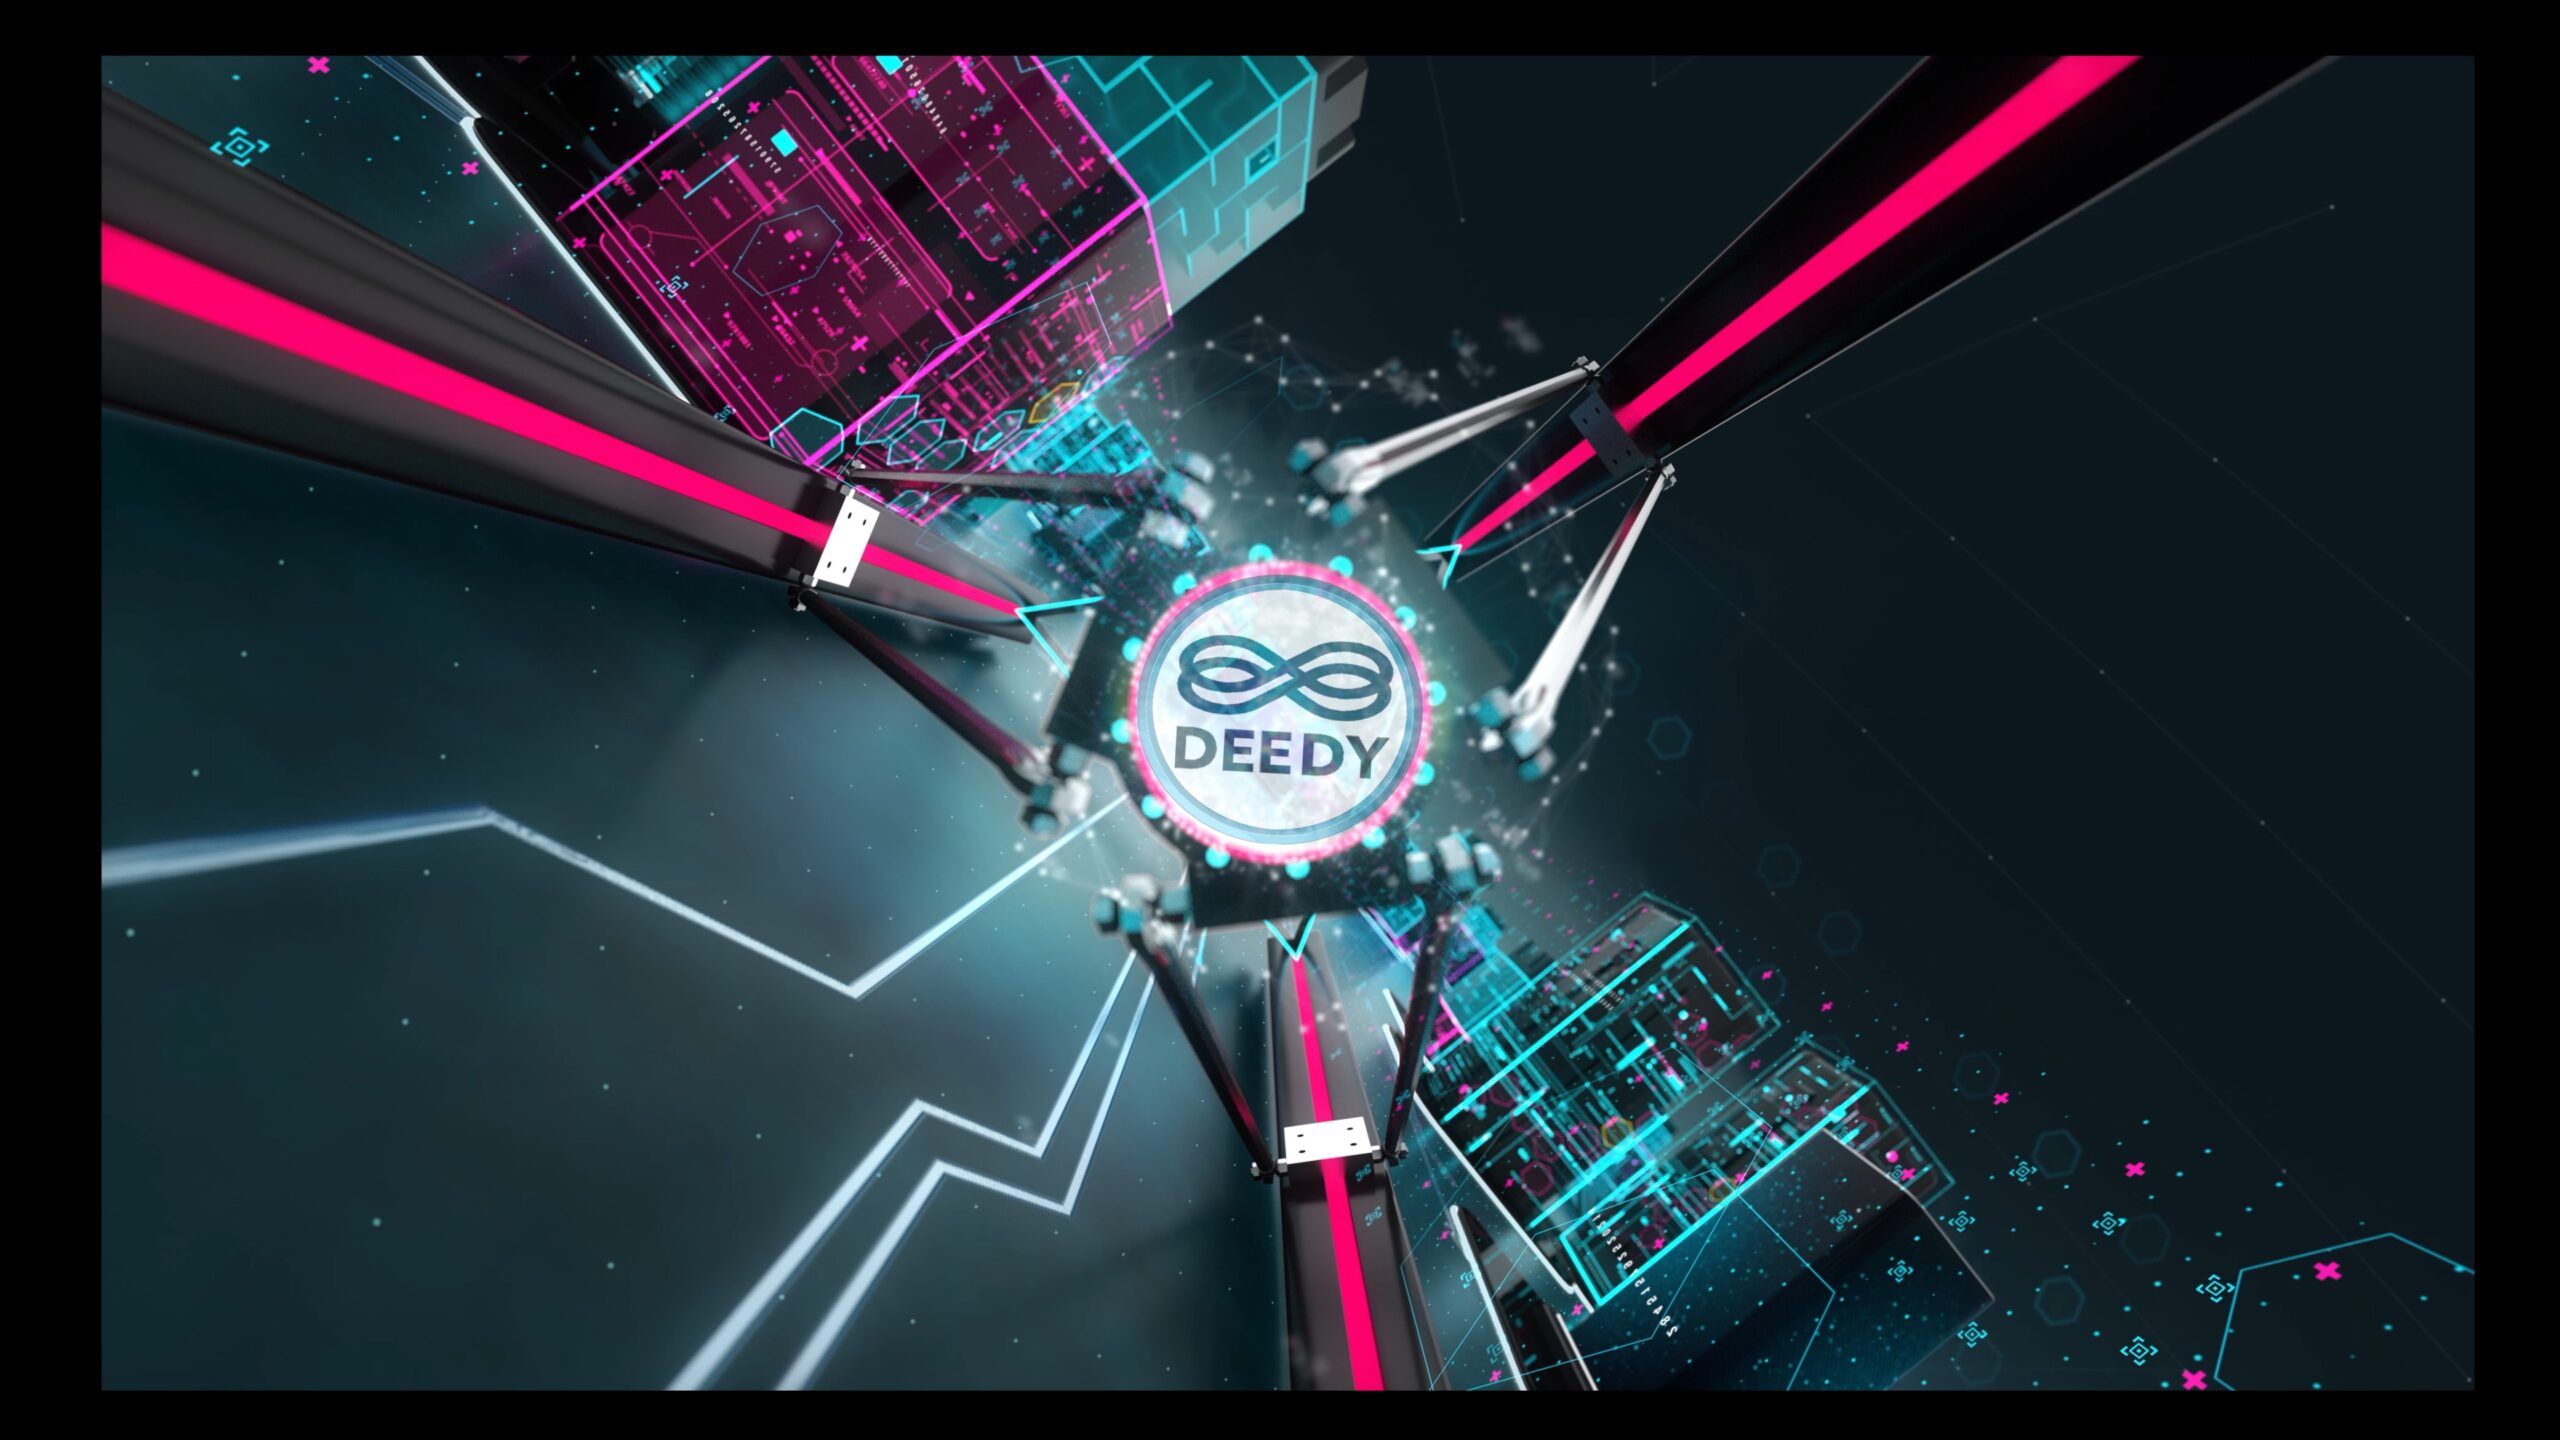 Deedy logo in the center of high-tech visuals